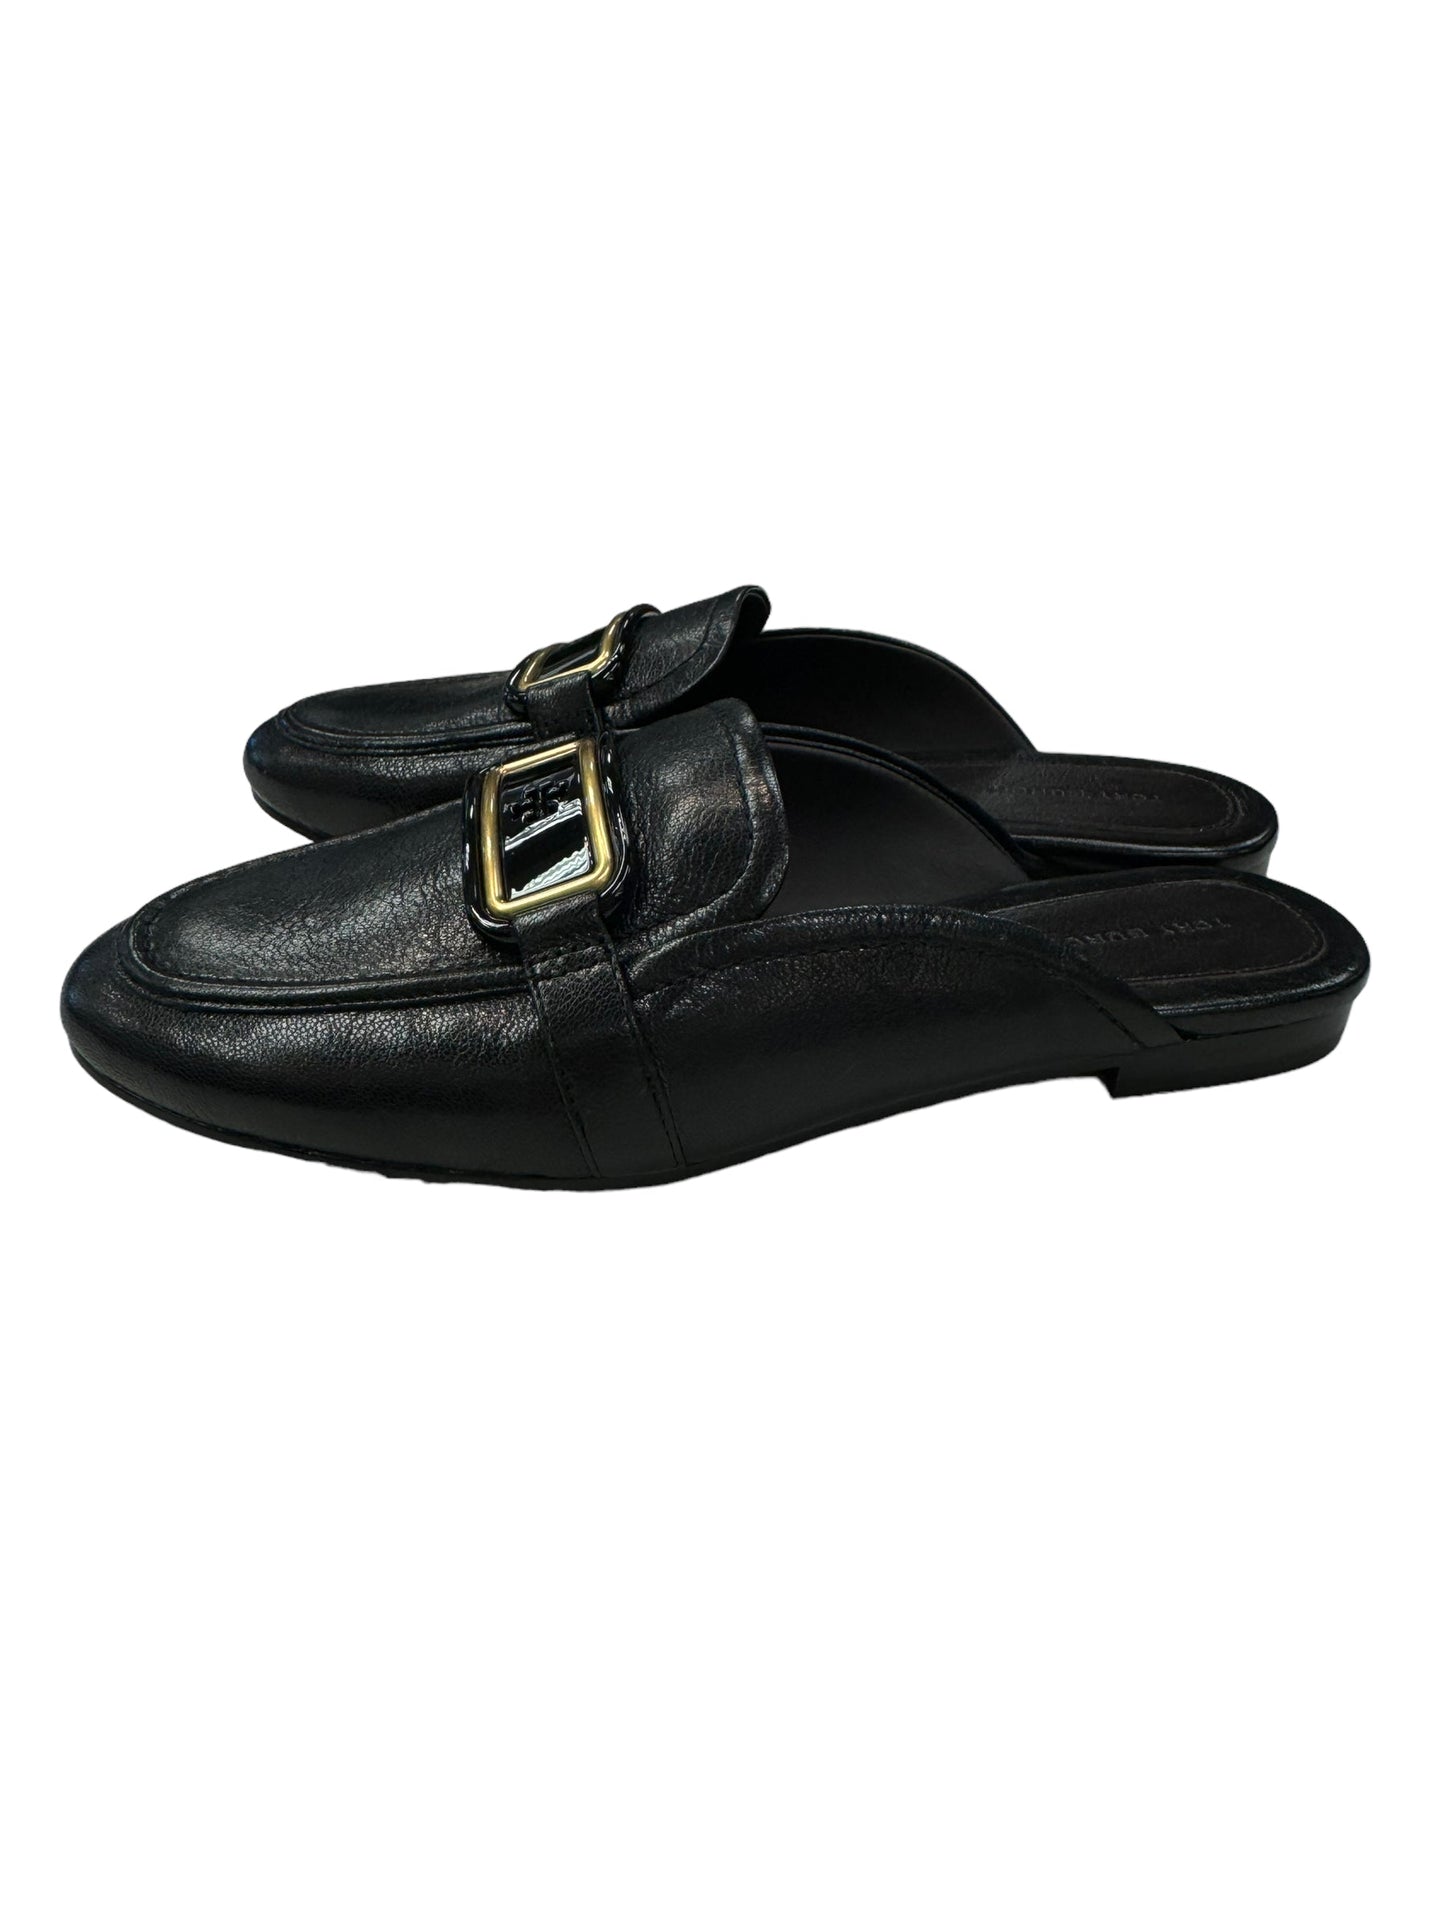 Black Shoes Designer Tory Burch, Size 7.5